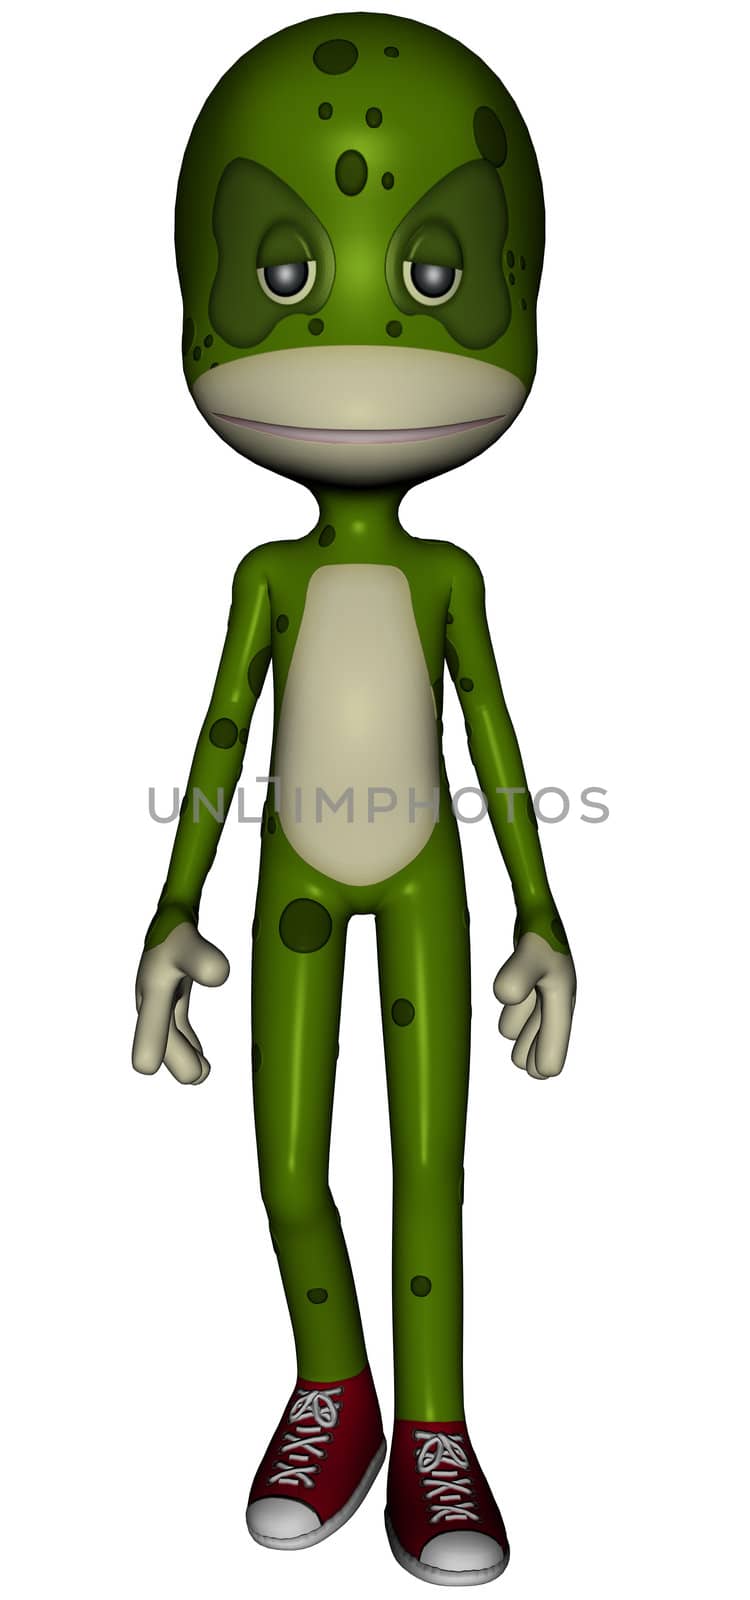 Michael cartoon chameleon character by Wampa